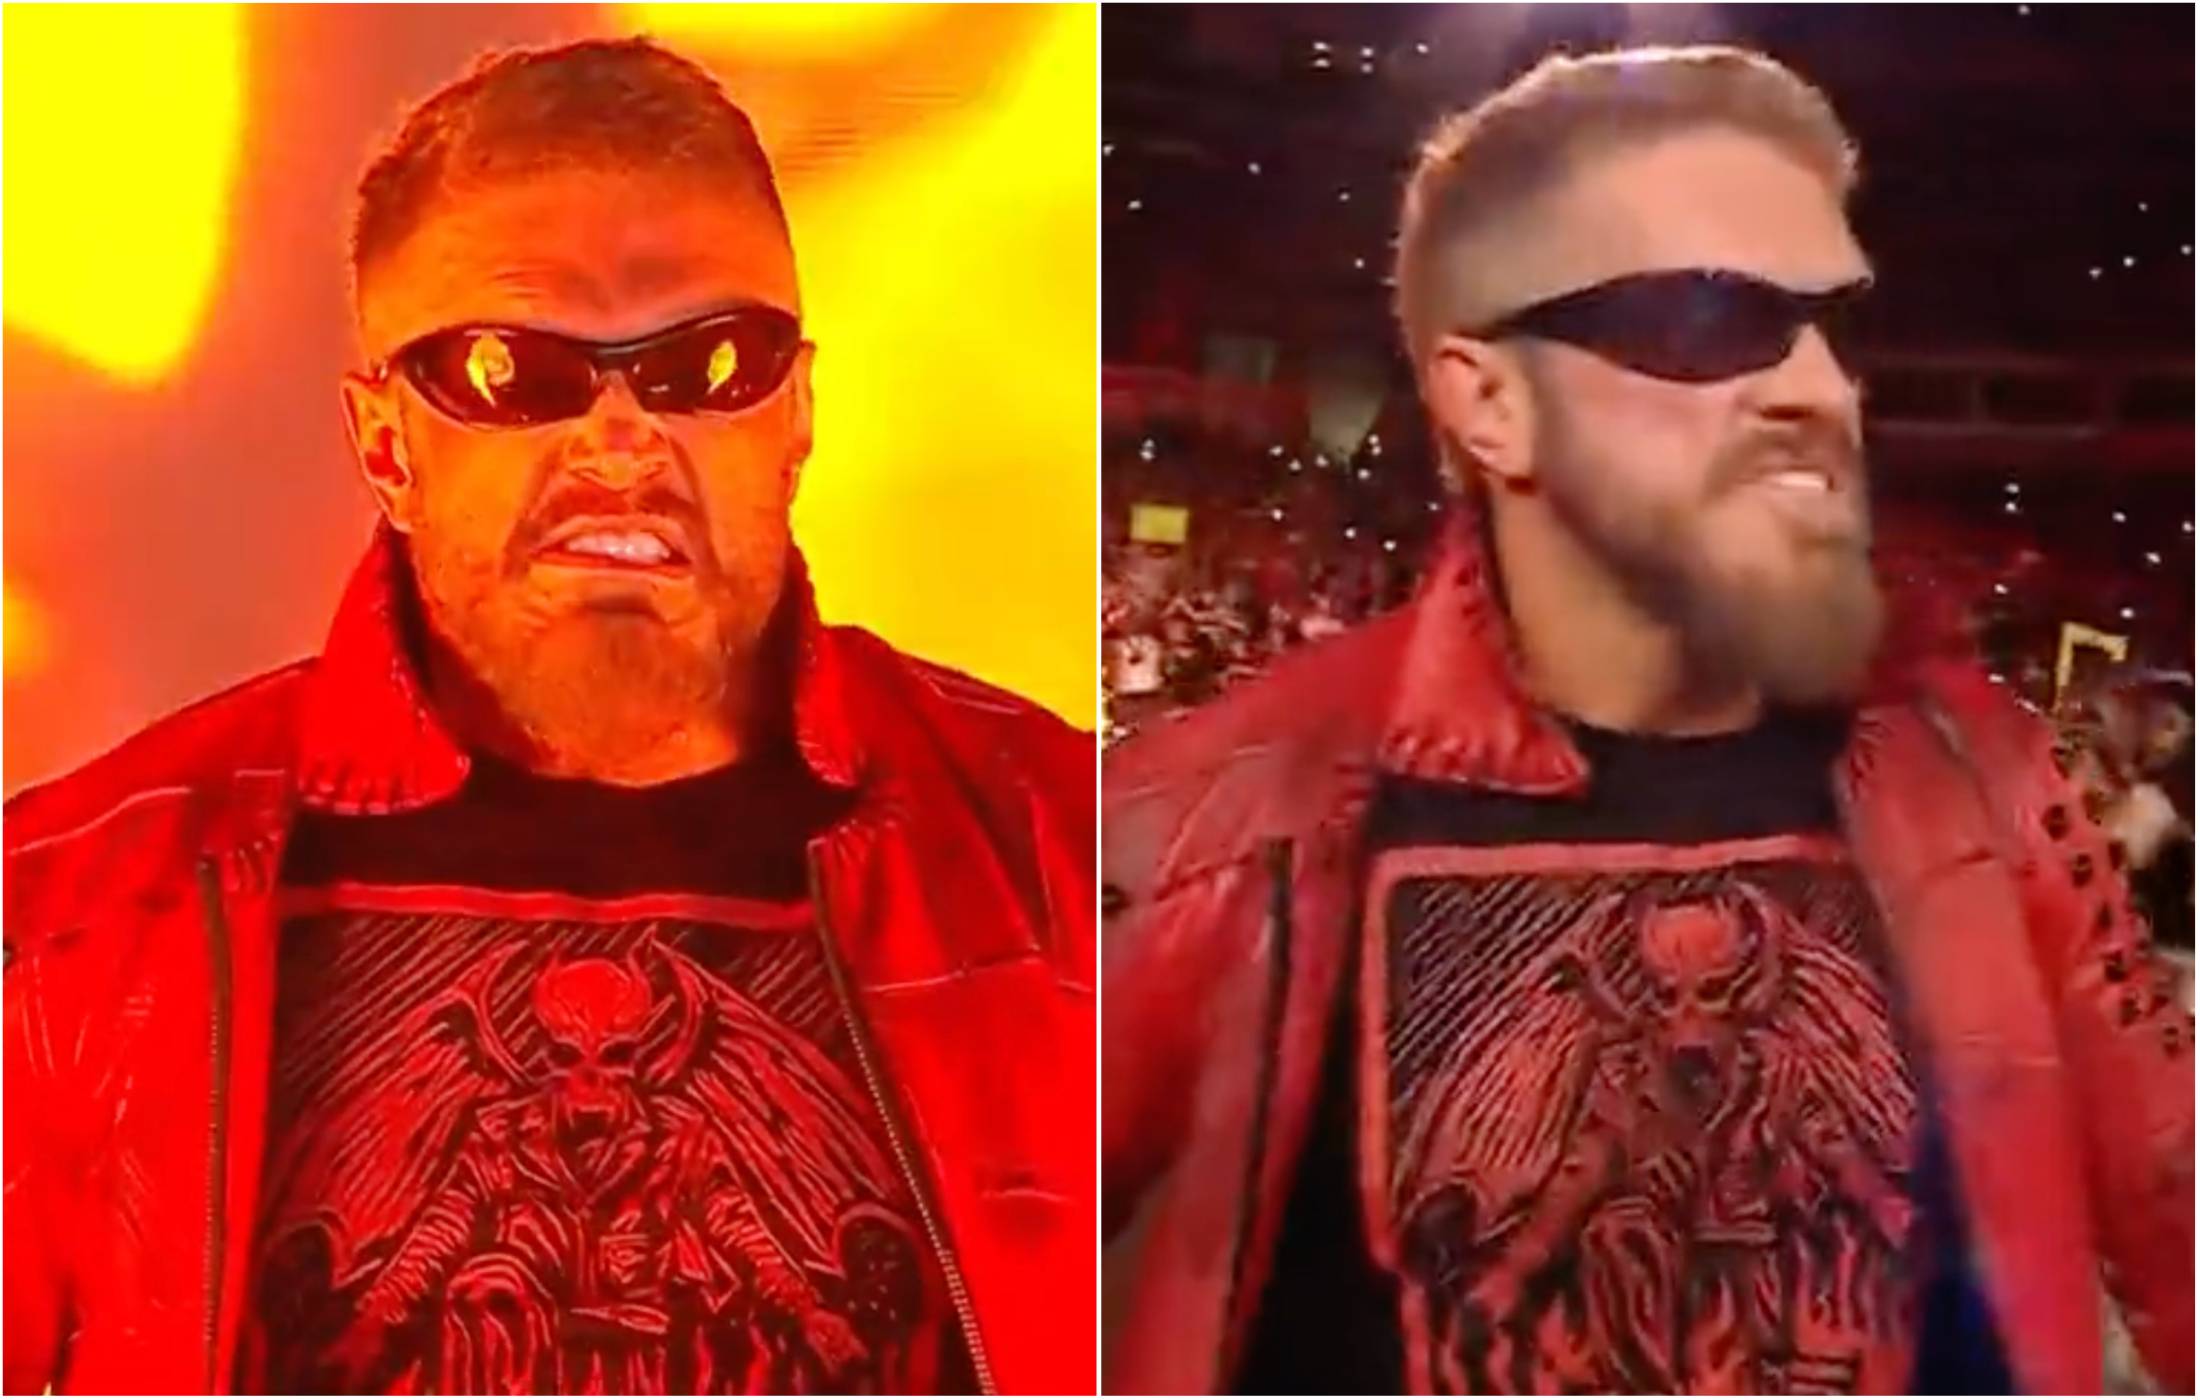 Edge returned to WWE at SummerSlam